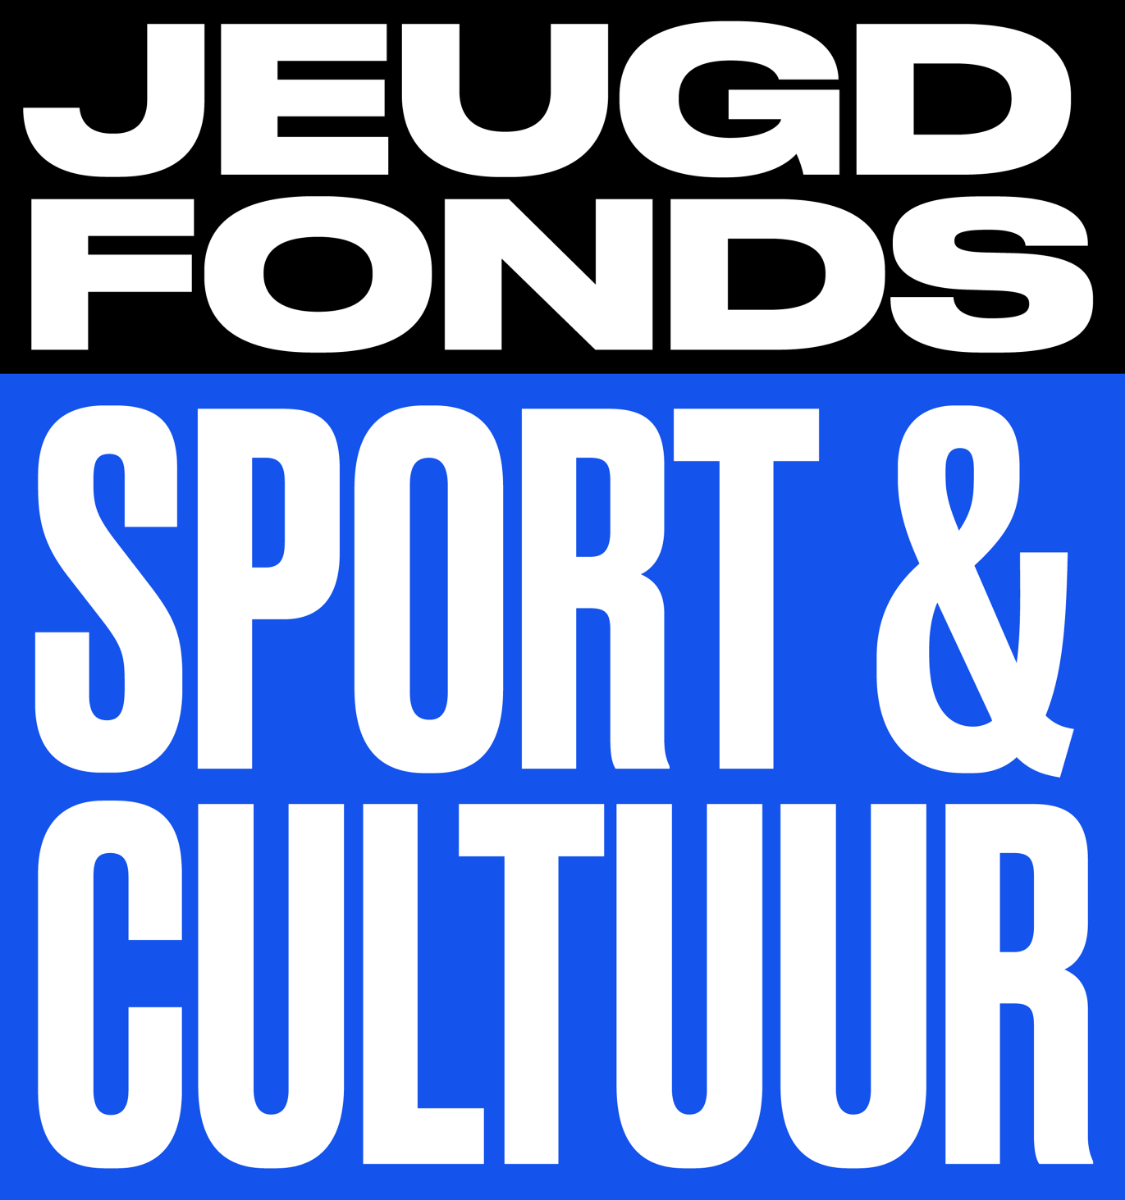 Bericht Jeugdfonds Sport & Cultuur bekijken